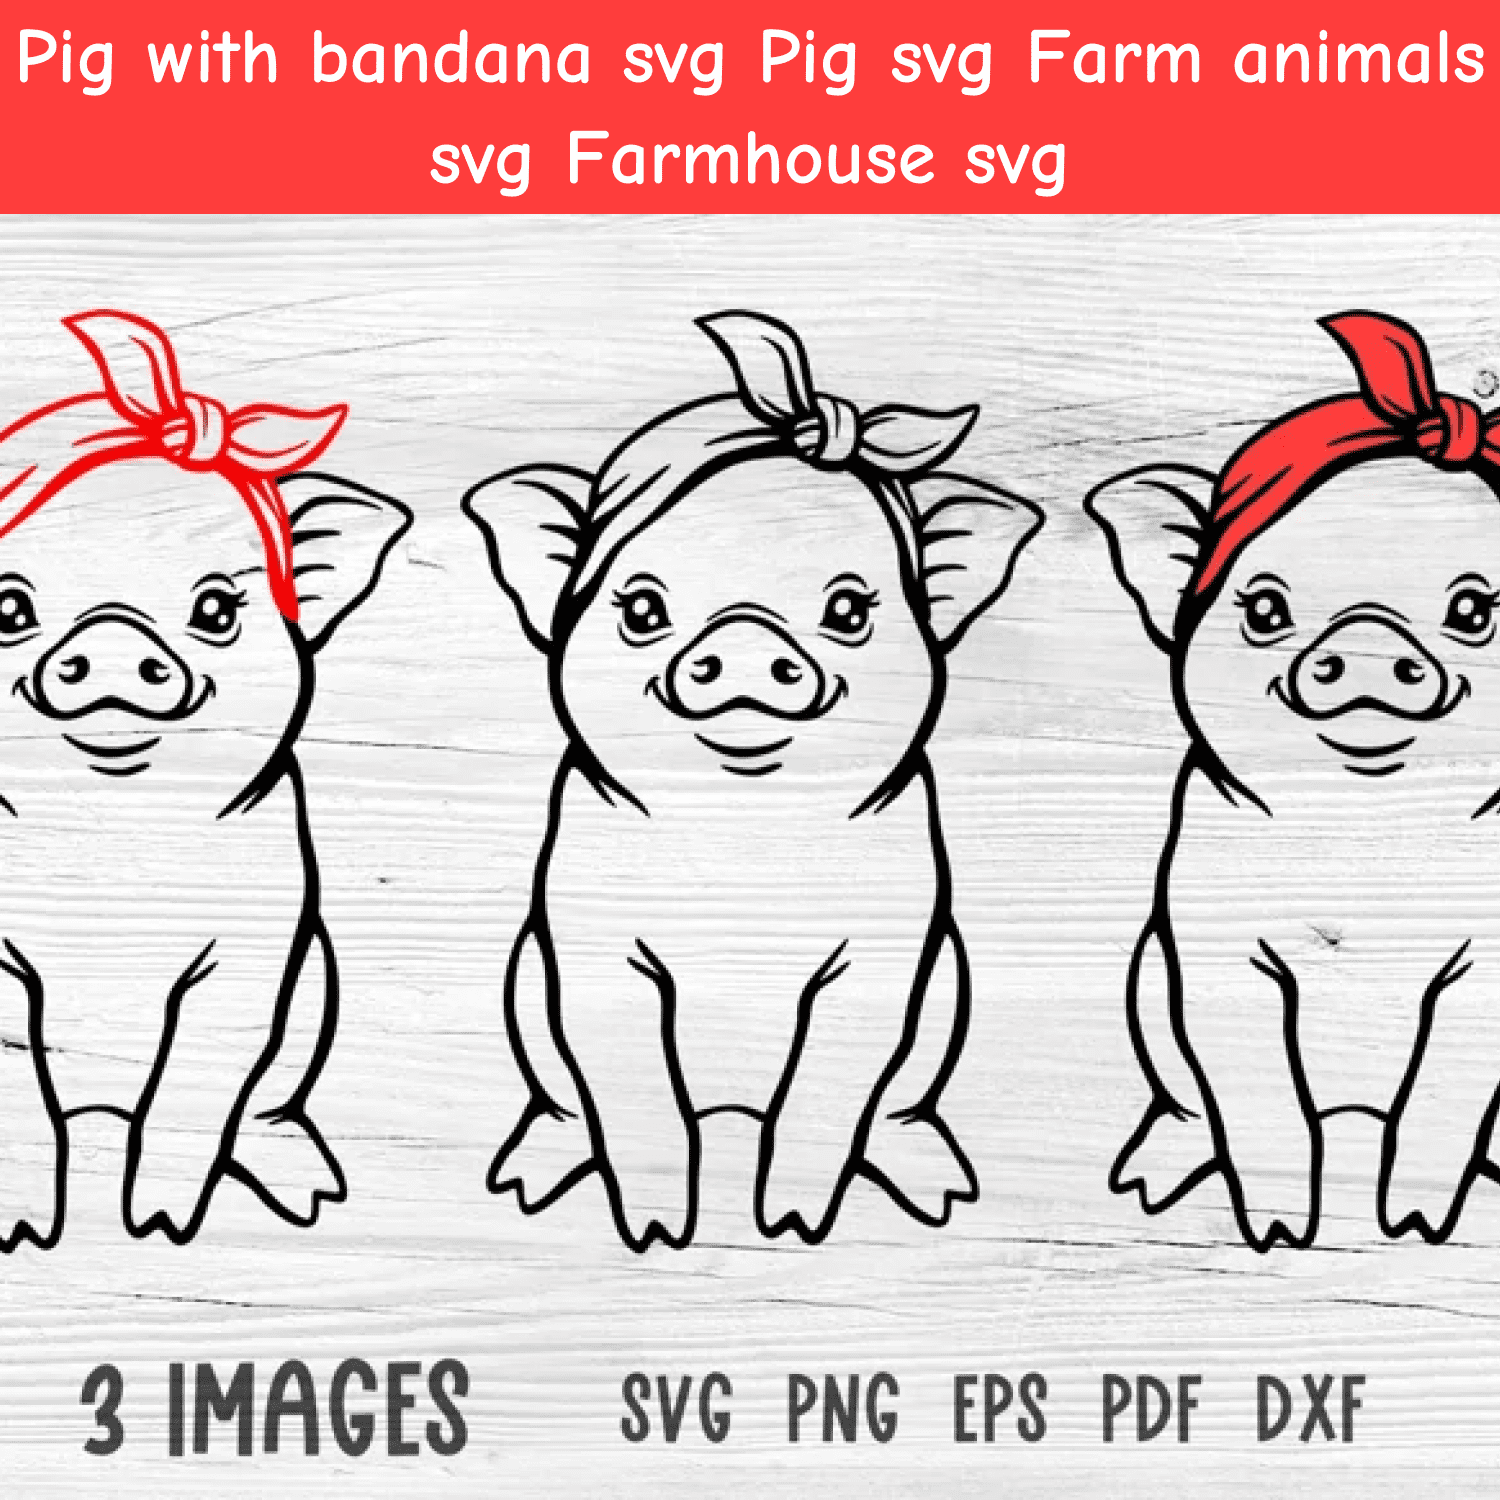 Three pigs with bandana pig svg farm animals.